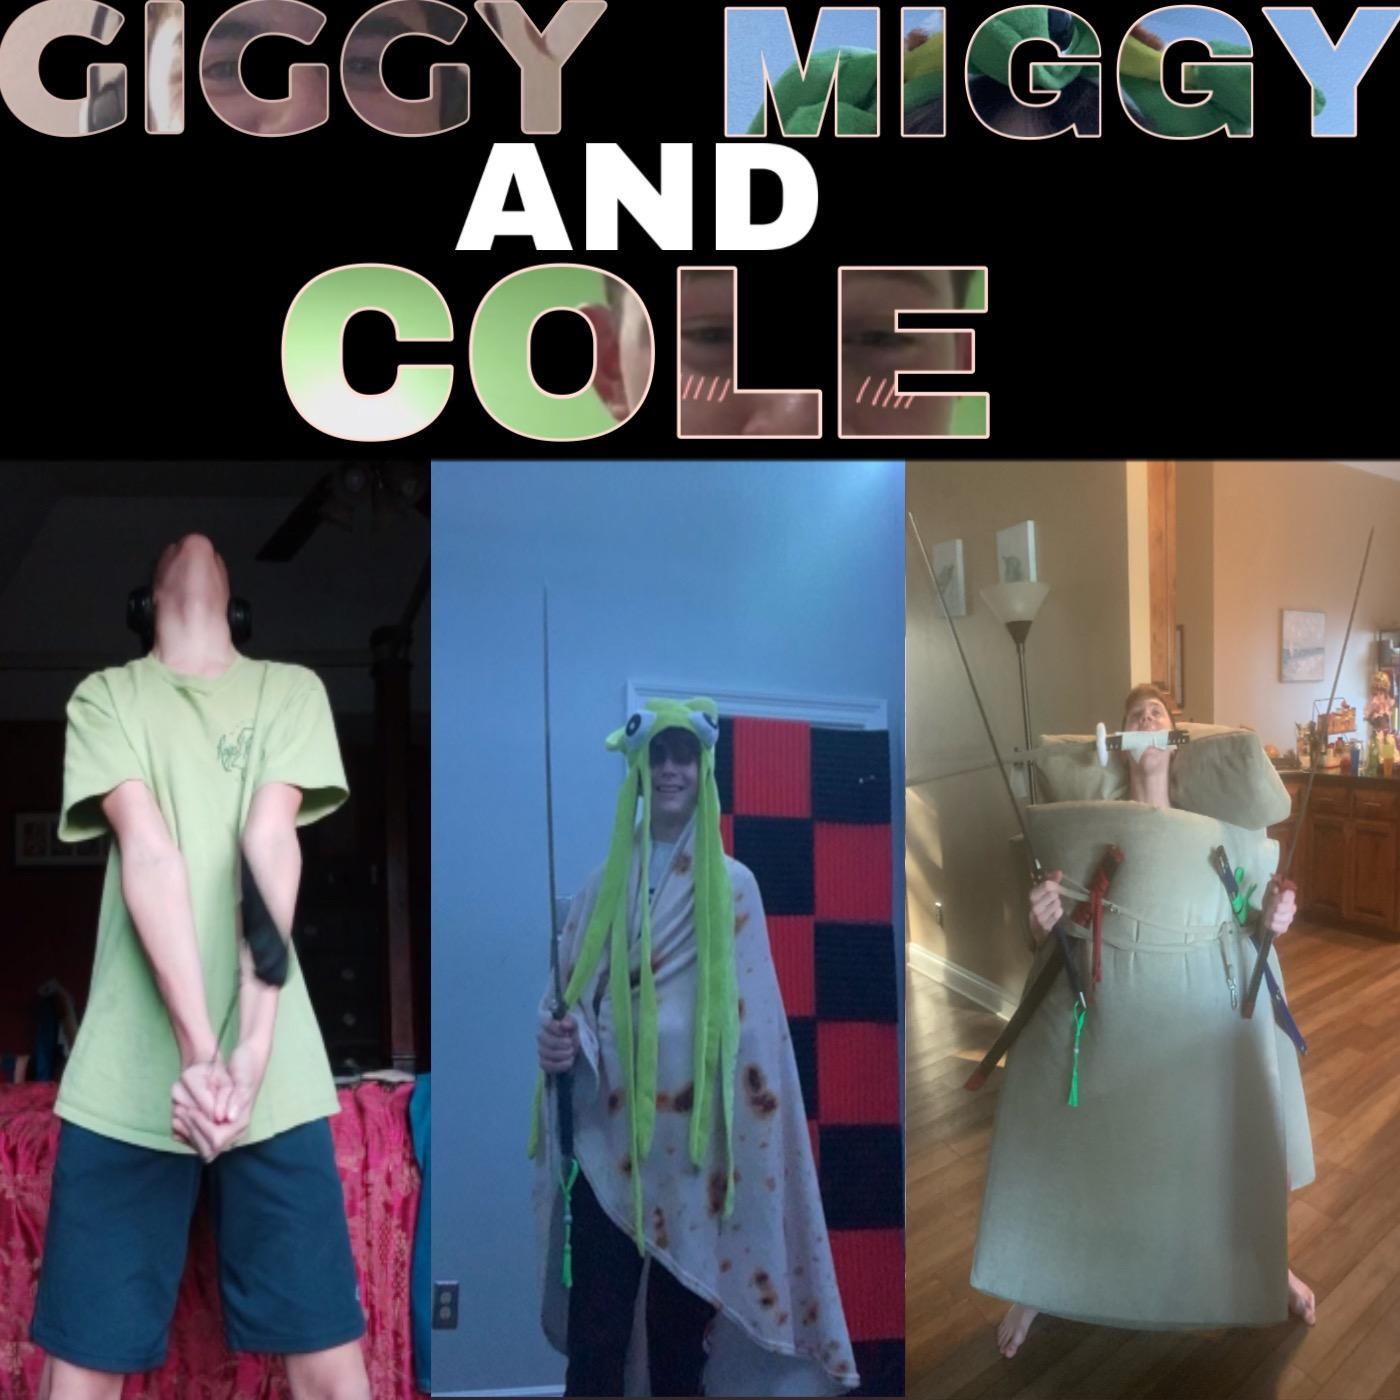 Giggy, Miggy, and Cole